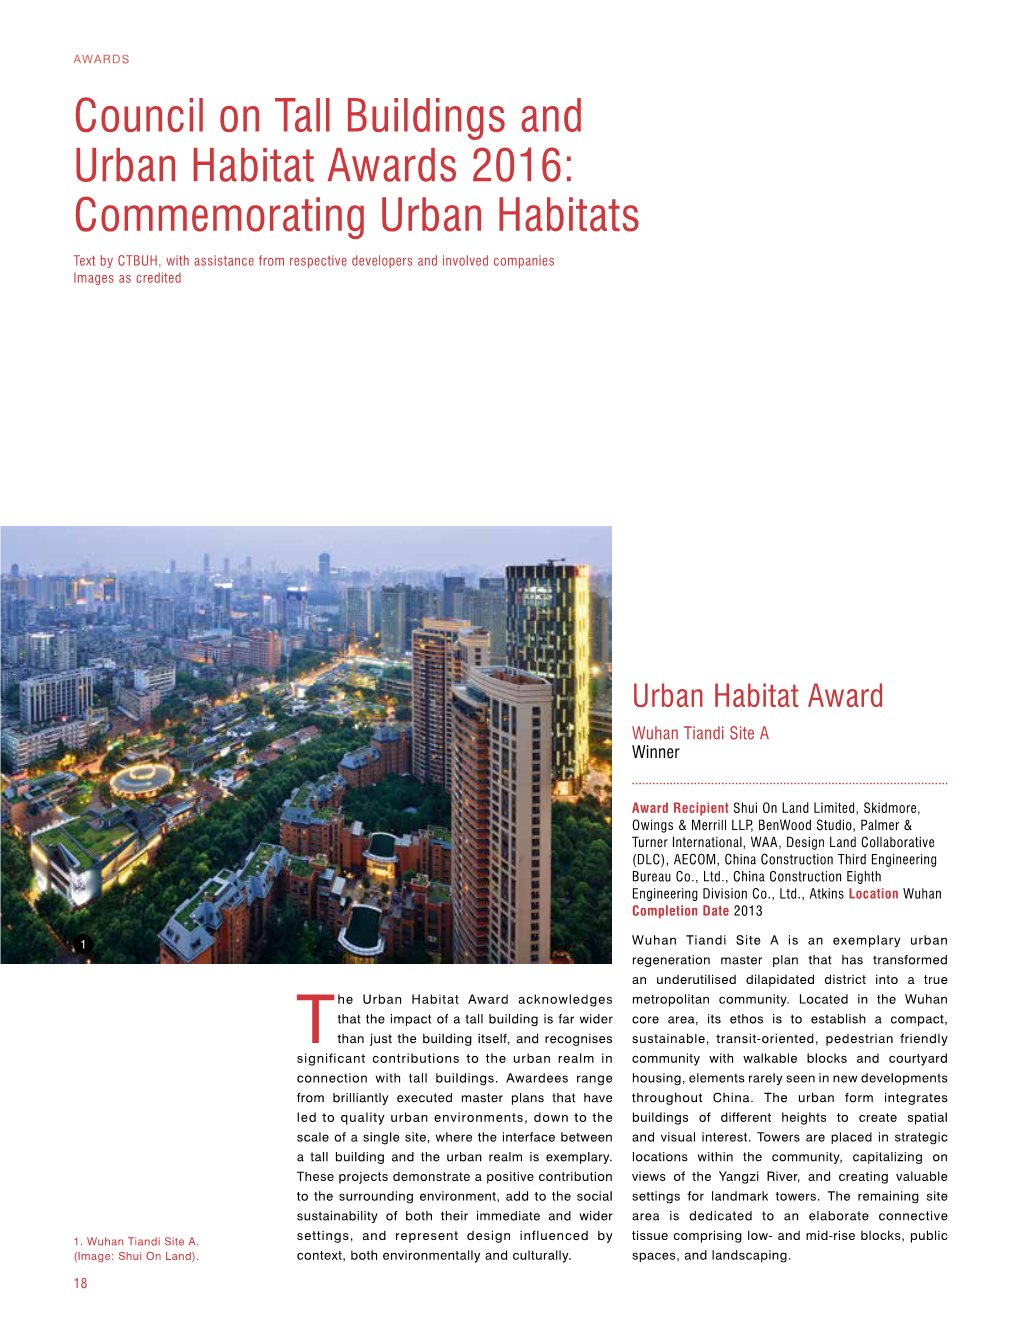 Council on Tall Buildings and Urban Habitat Awards 2016: Commemorating Urban Habitats